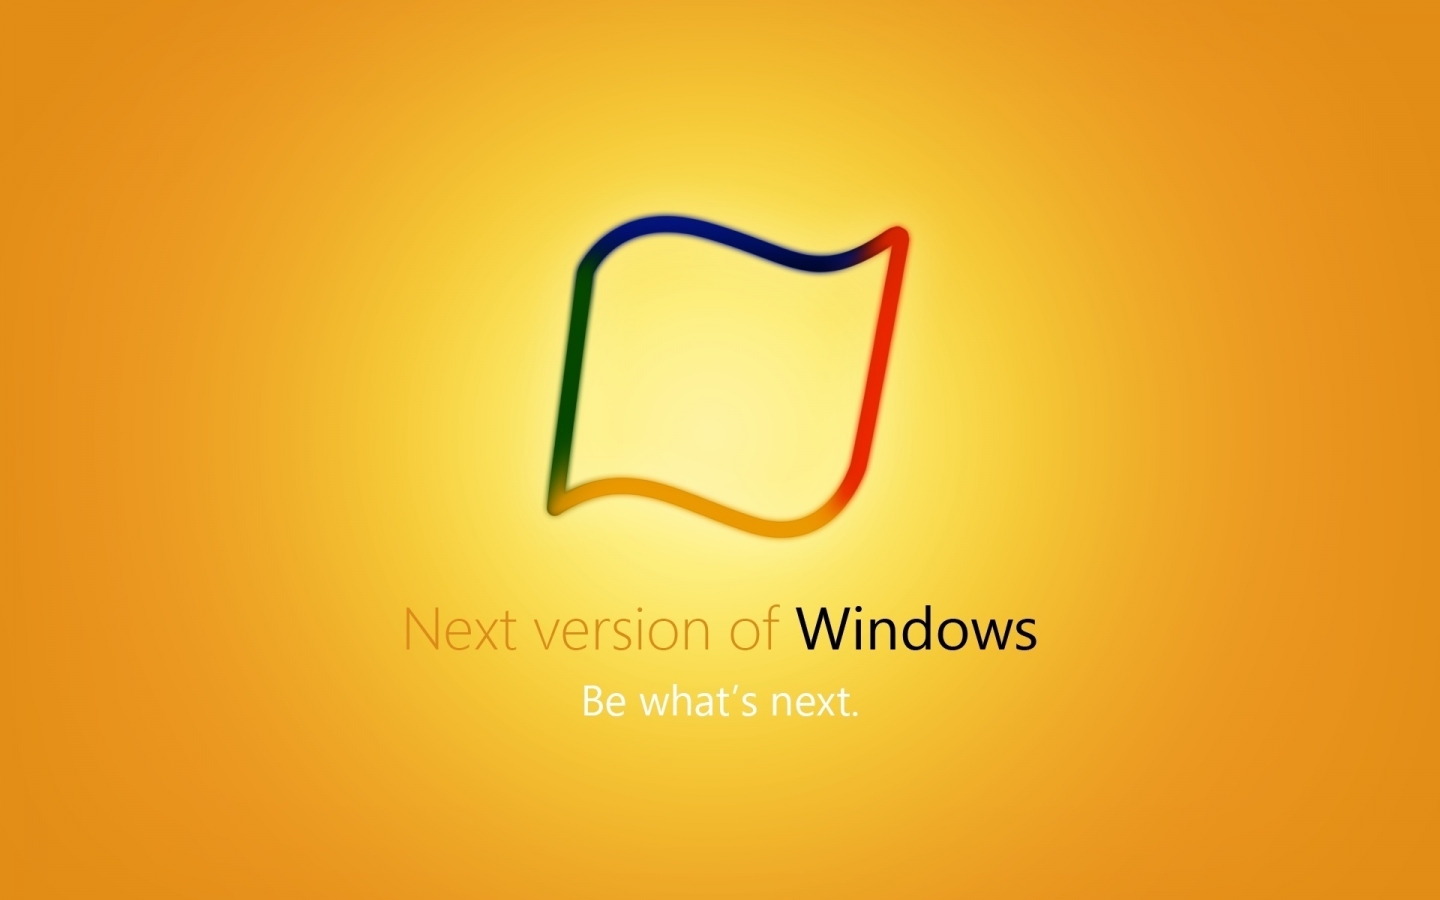 Next Windows 8 for 1440 x 900 widescreen resolution